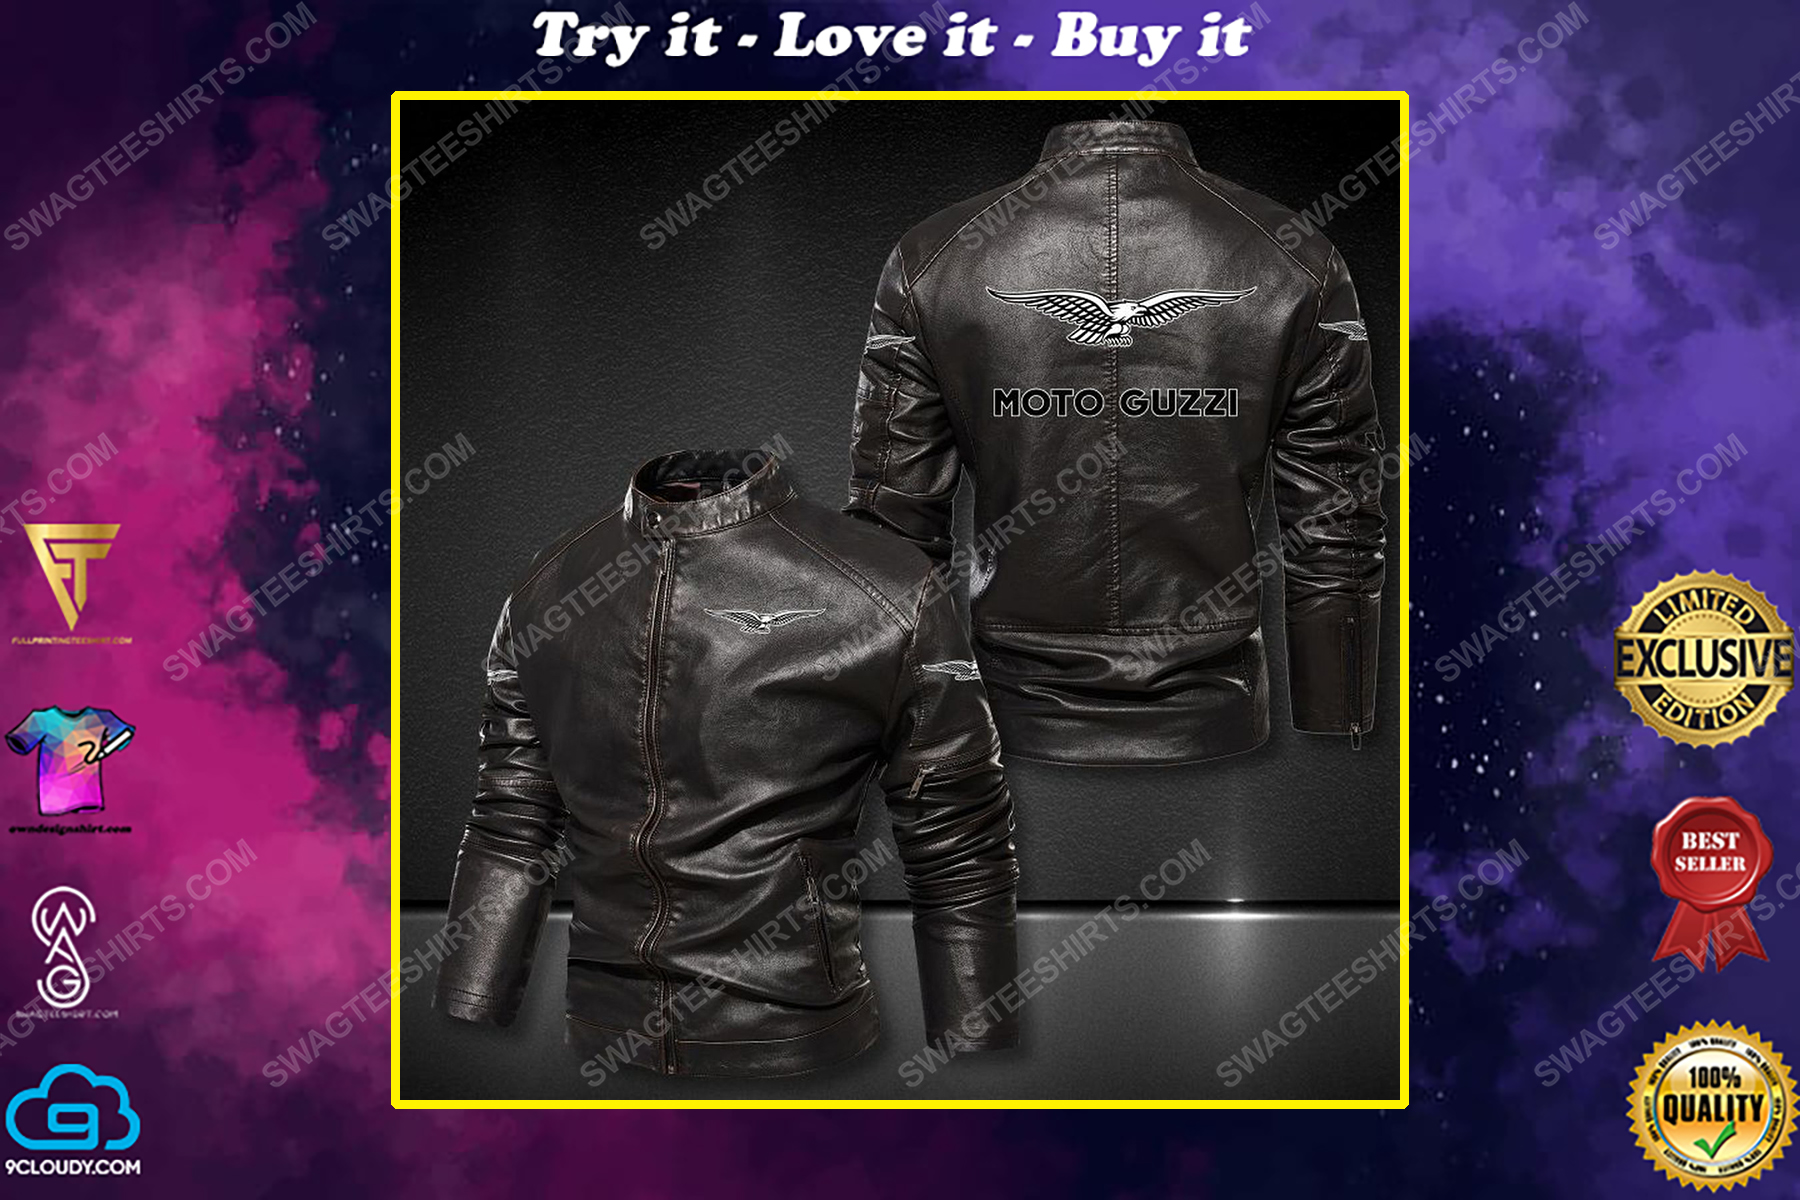 Moto guzzi motorcycles sport leather jacket